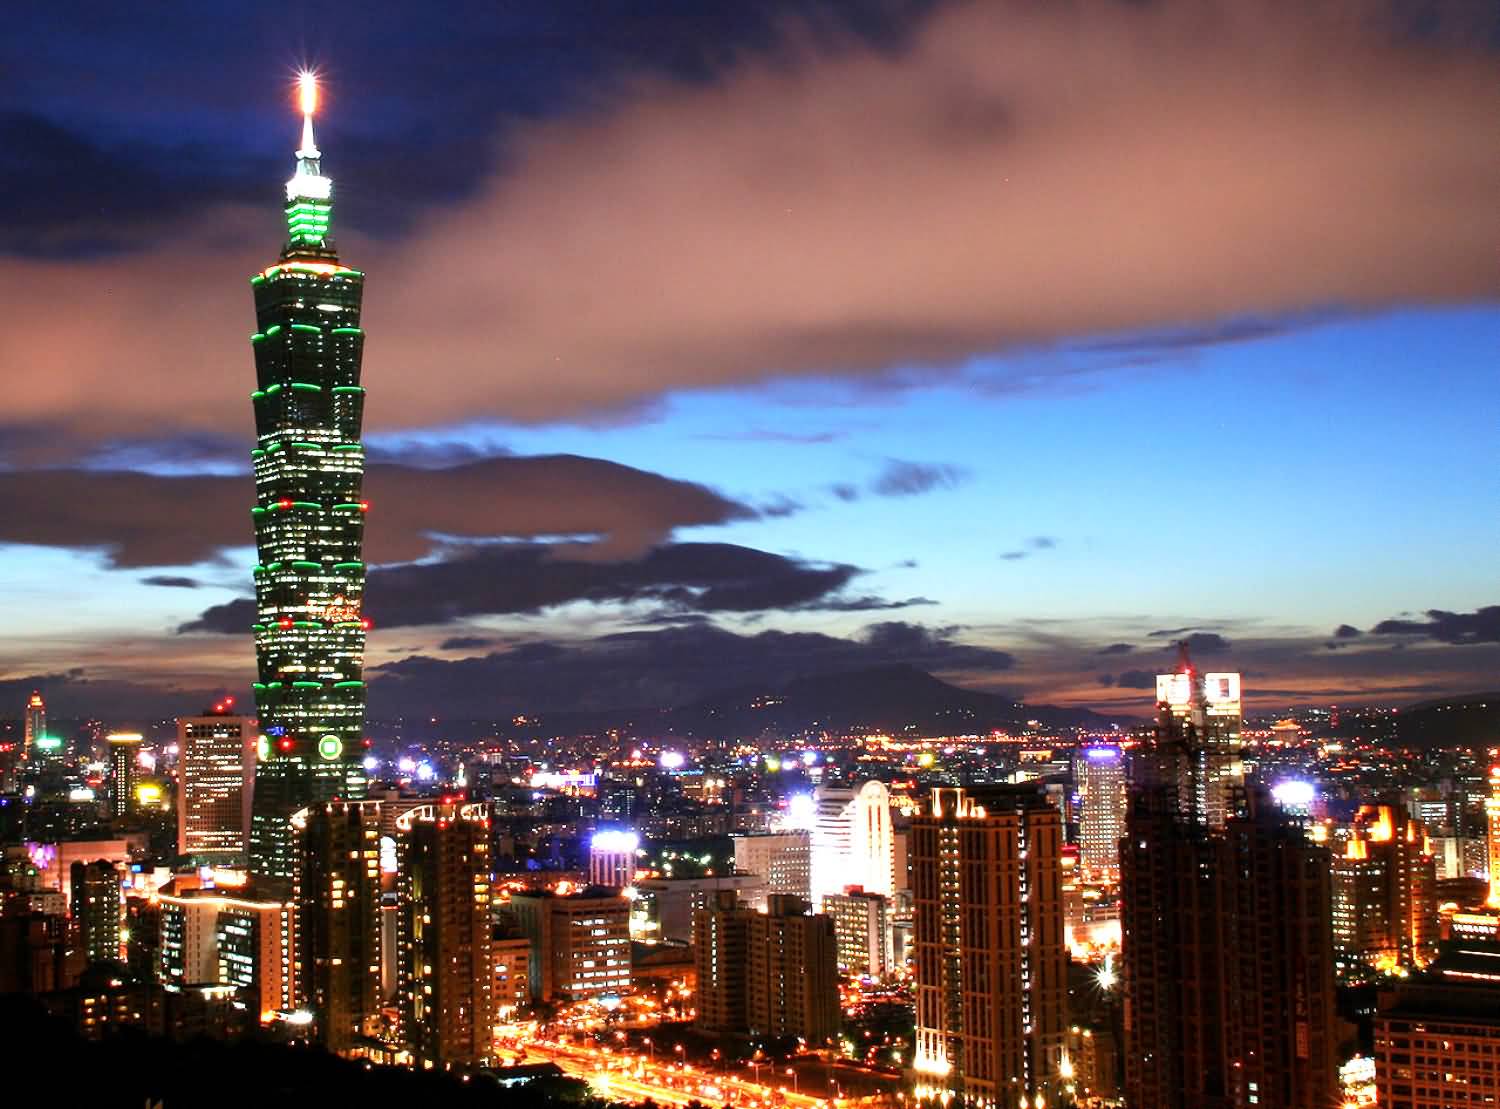 Taipei 101 Tower Looks Amazing With Night Lights